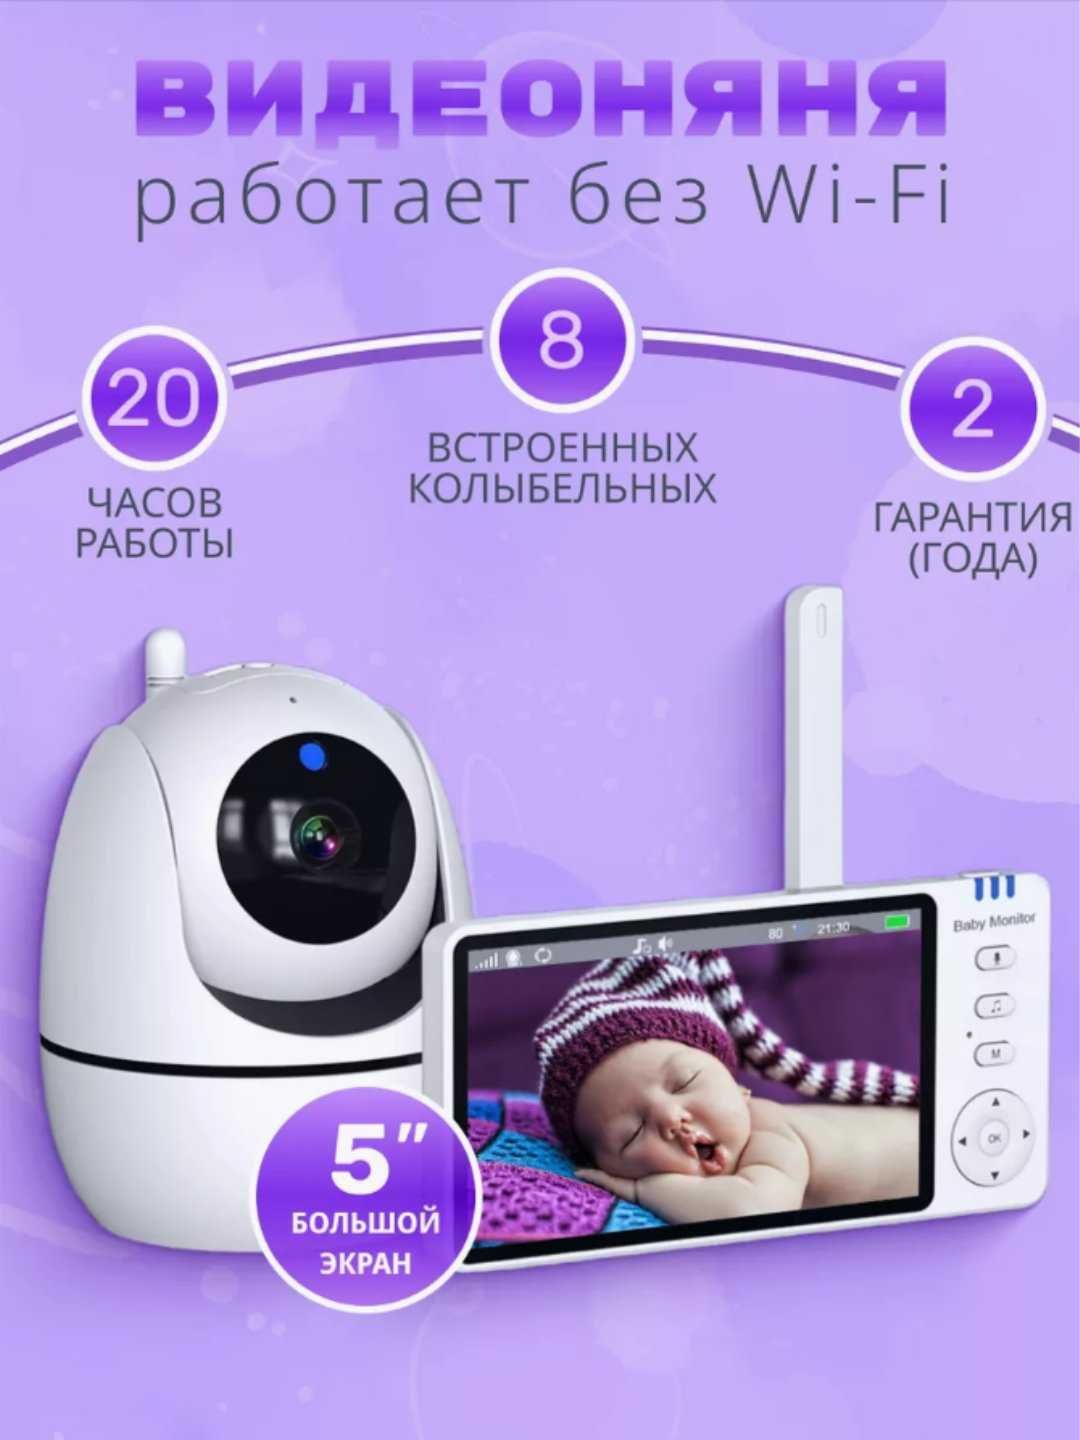 Baby Monitor - Видео няня 360 градусов вращение - 5 дюйм дисплей